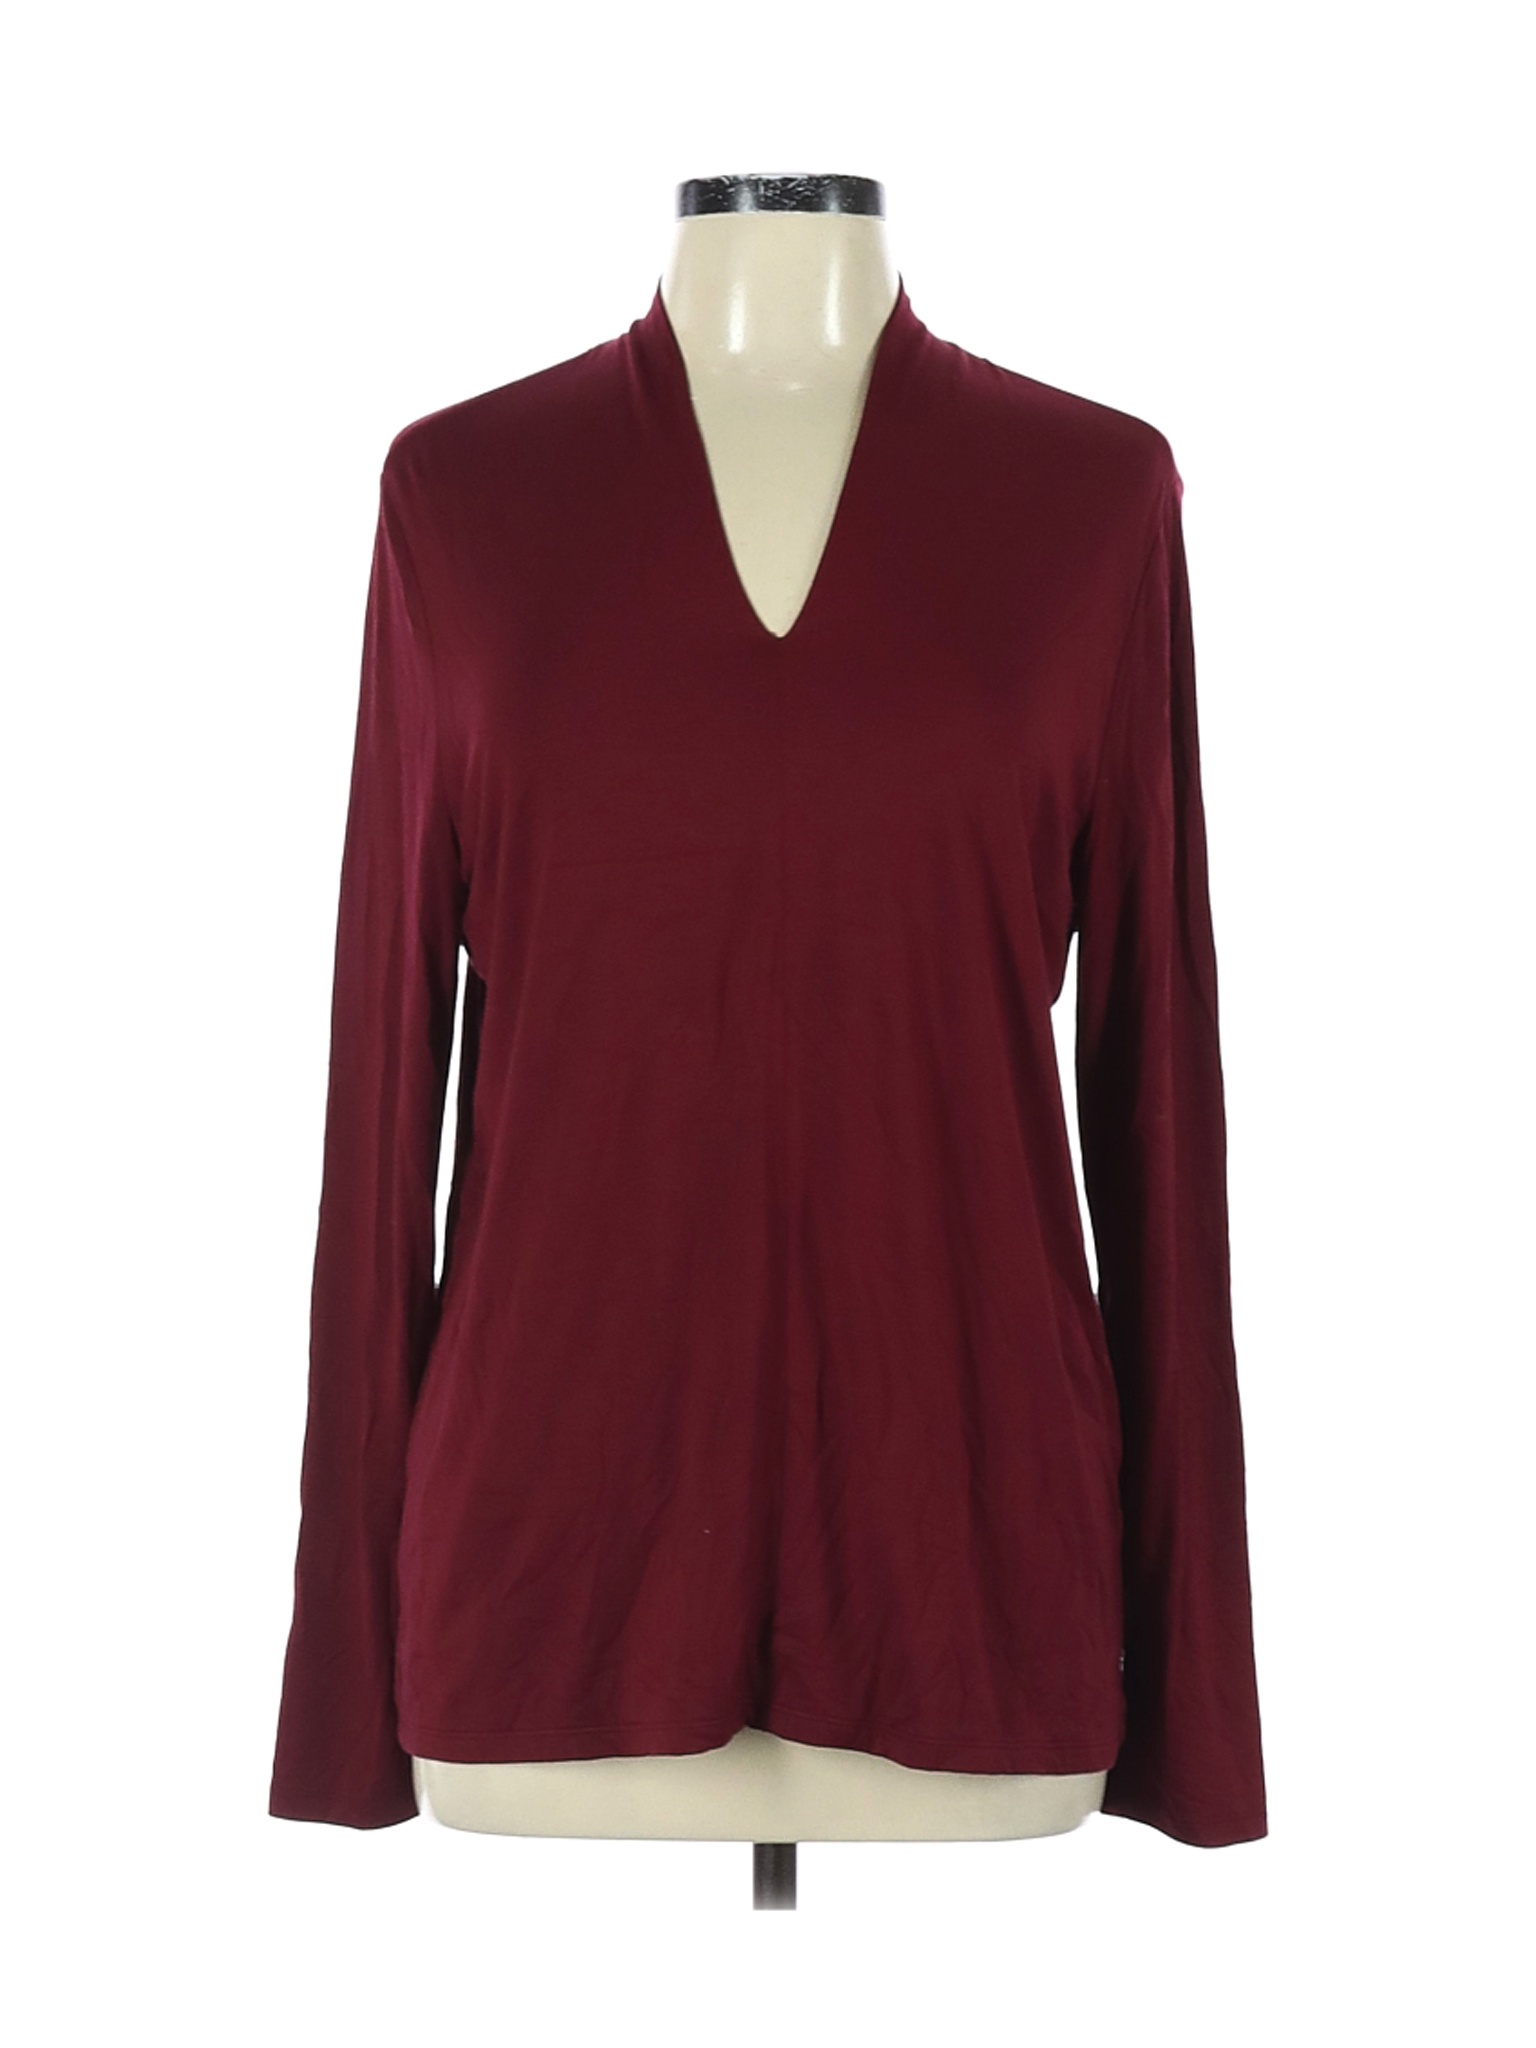 Talbots Women Red Long Sleeve T-Shirt L | eBay